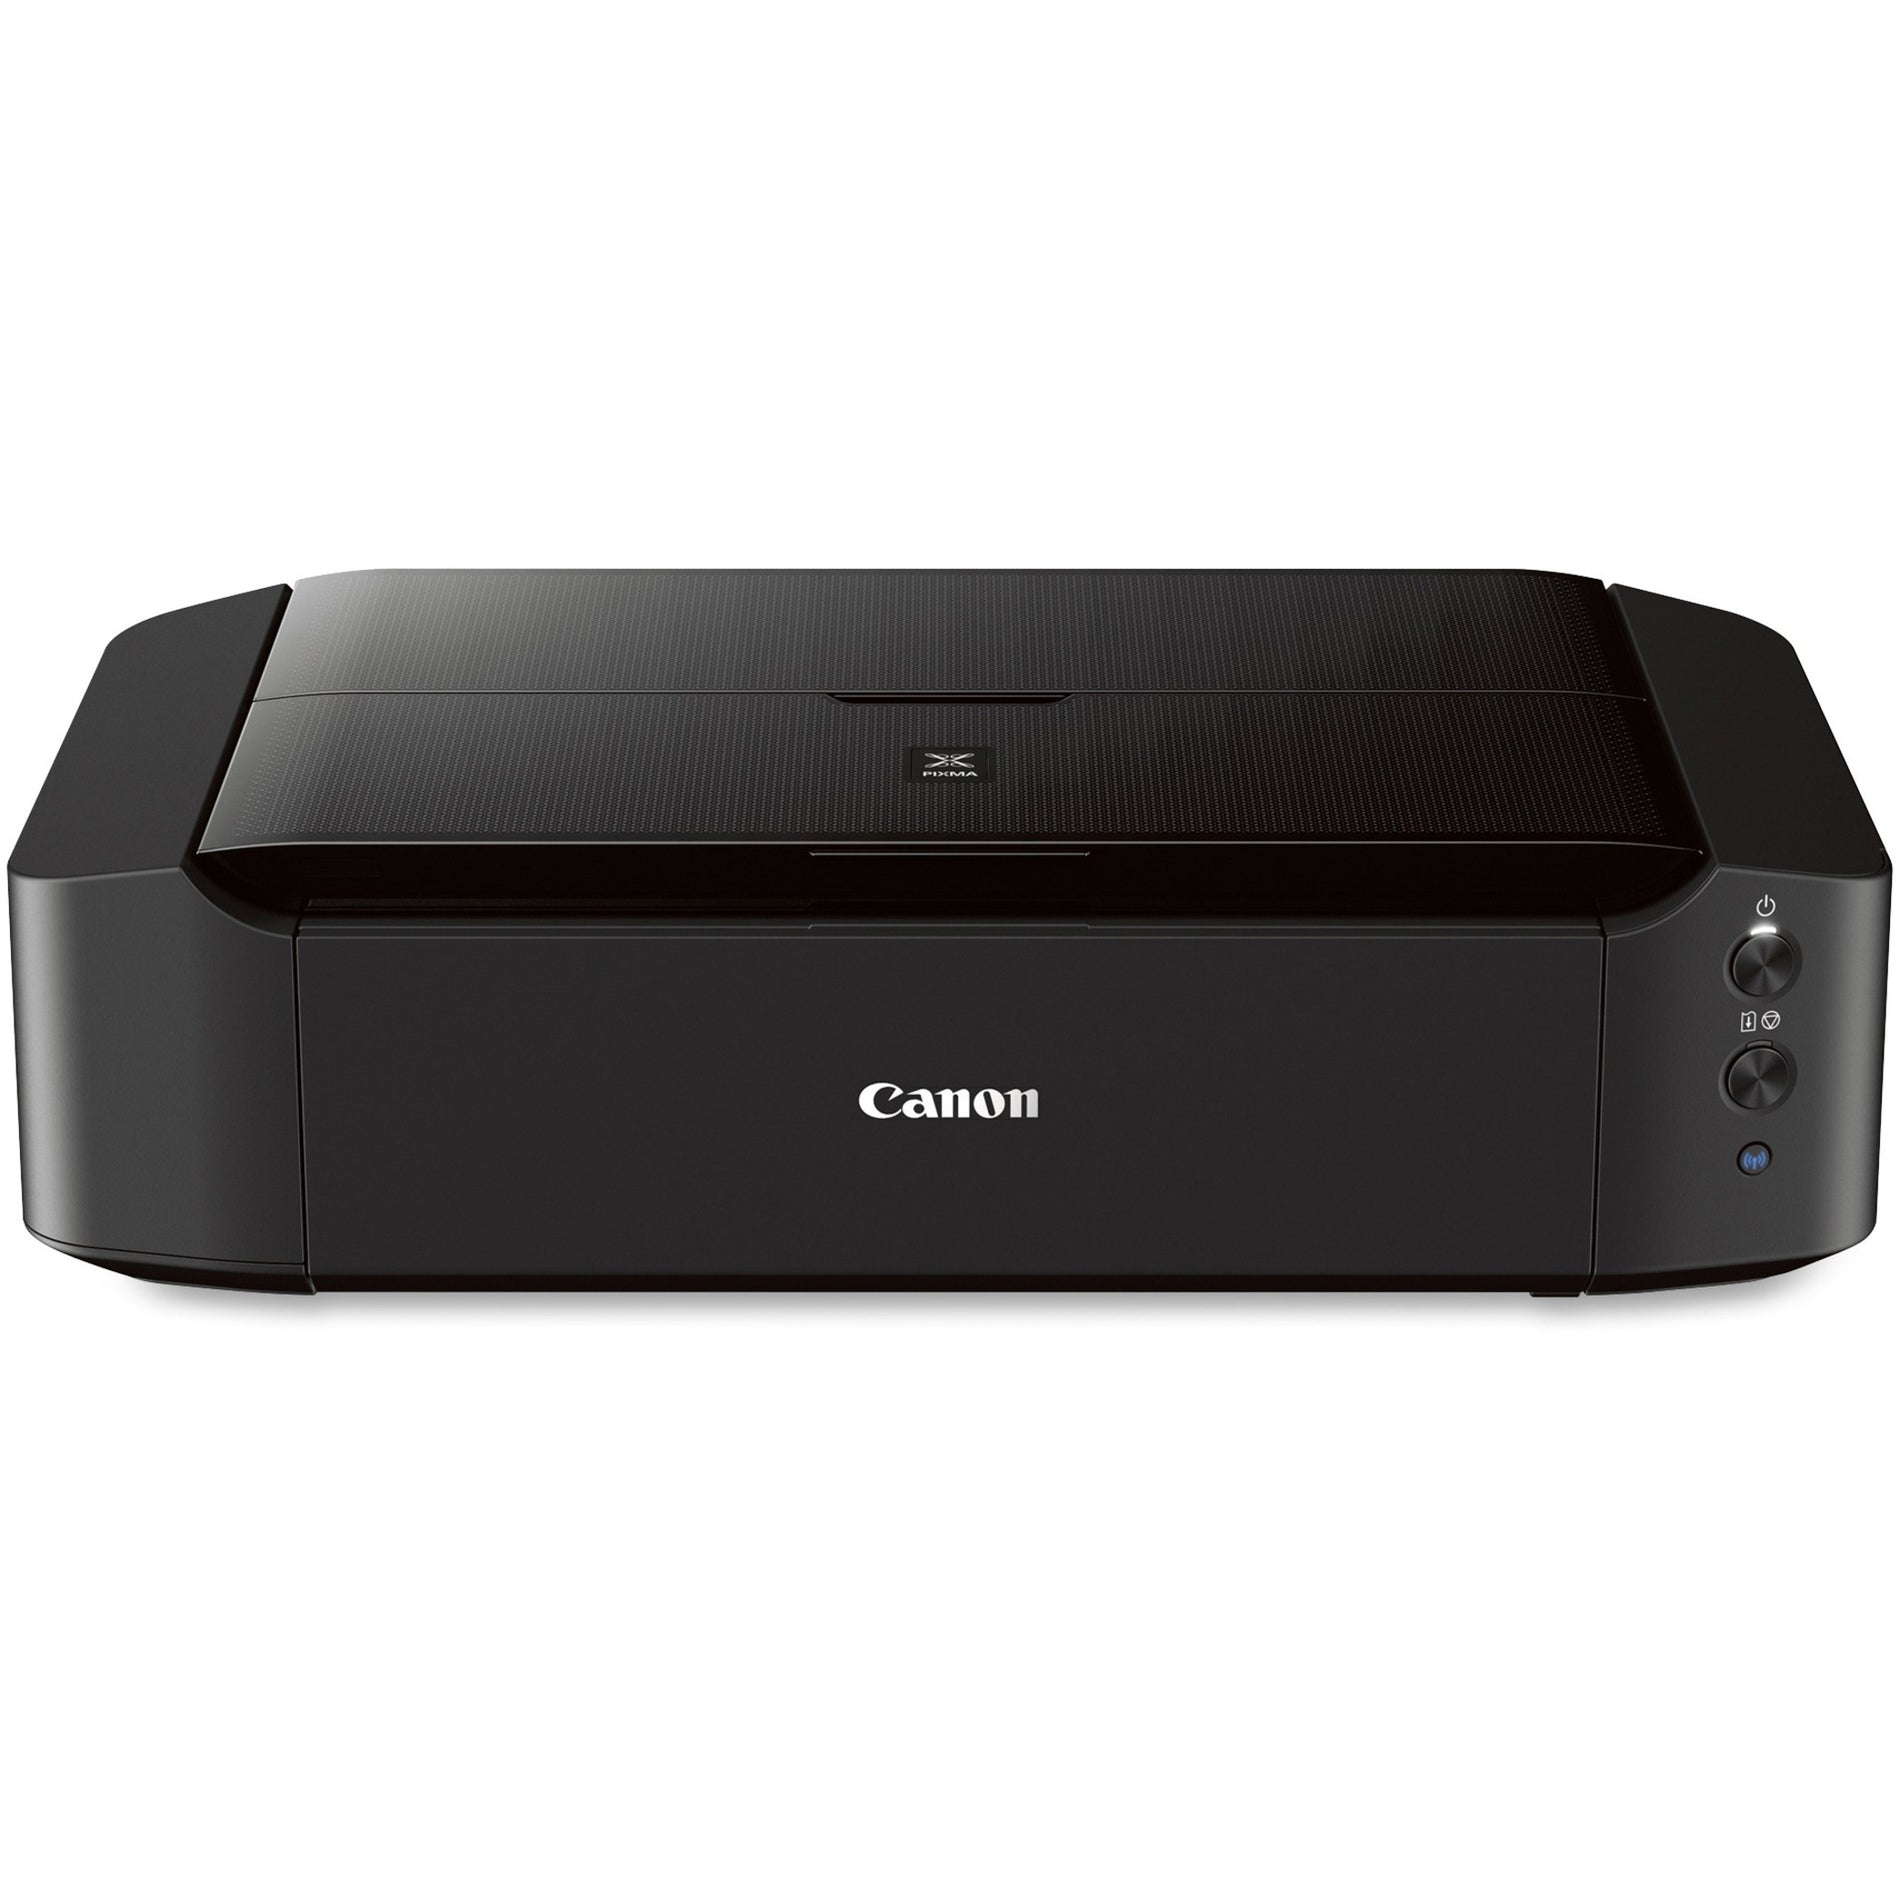 Canon 8746B002 PIXMA iP8720 Crafting Printer, 9600x2400dpi, 23"x13"x6", Black